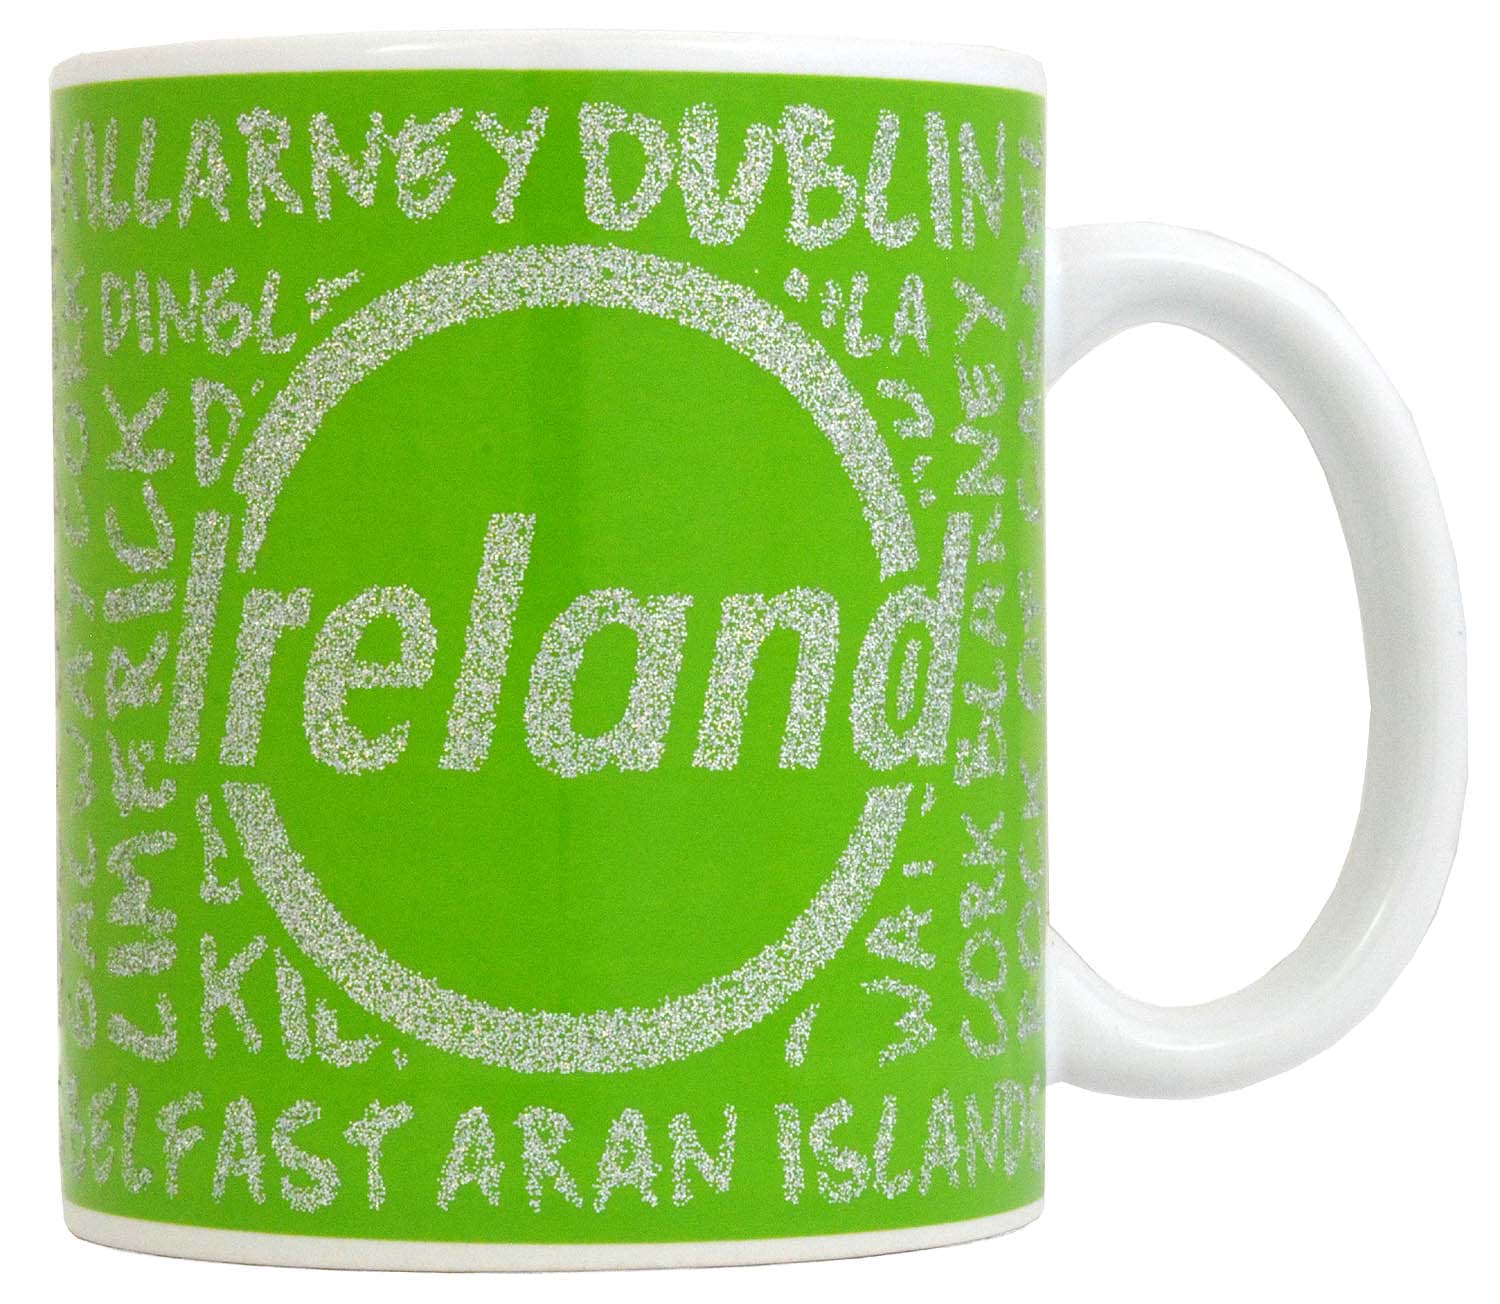 Picture of Glitter Ceramic Mug Ireland